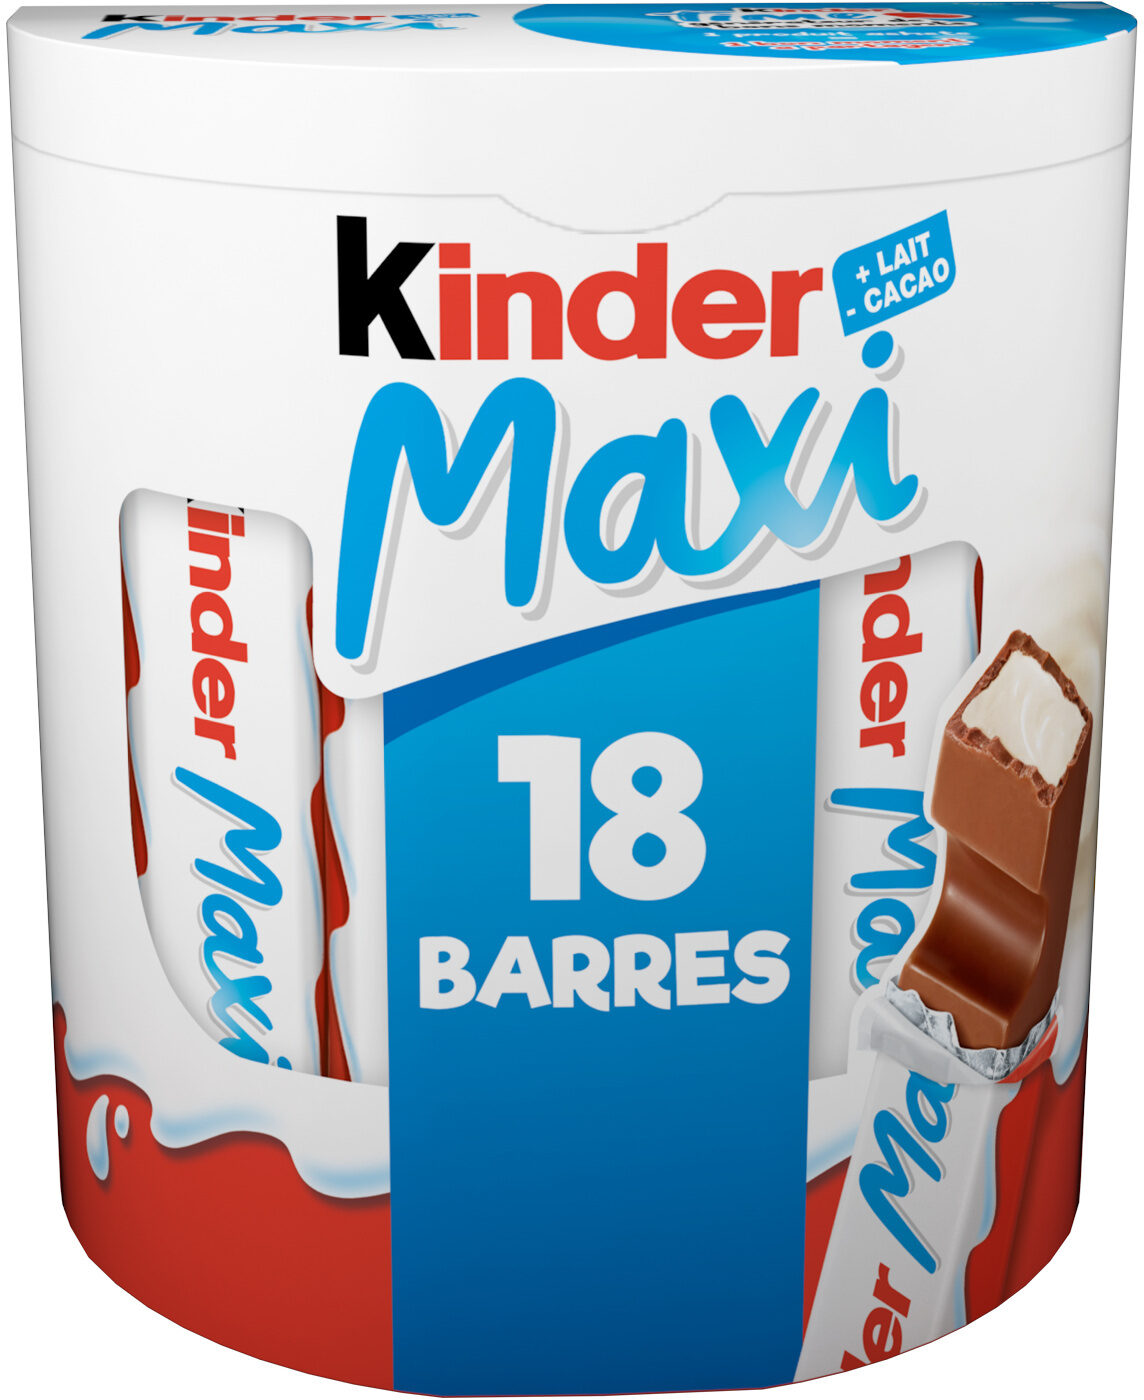 Barre Chocolatée Kinder Maxi Chocolat au Lait x18 - 378g - Product - fr